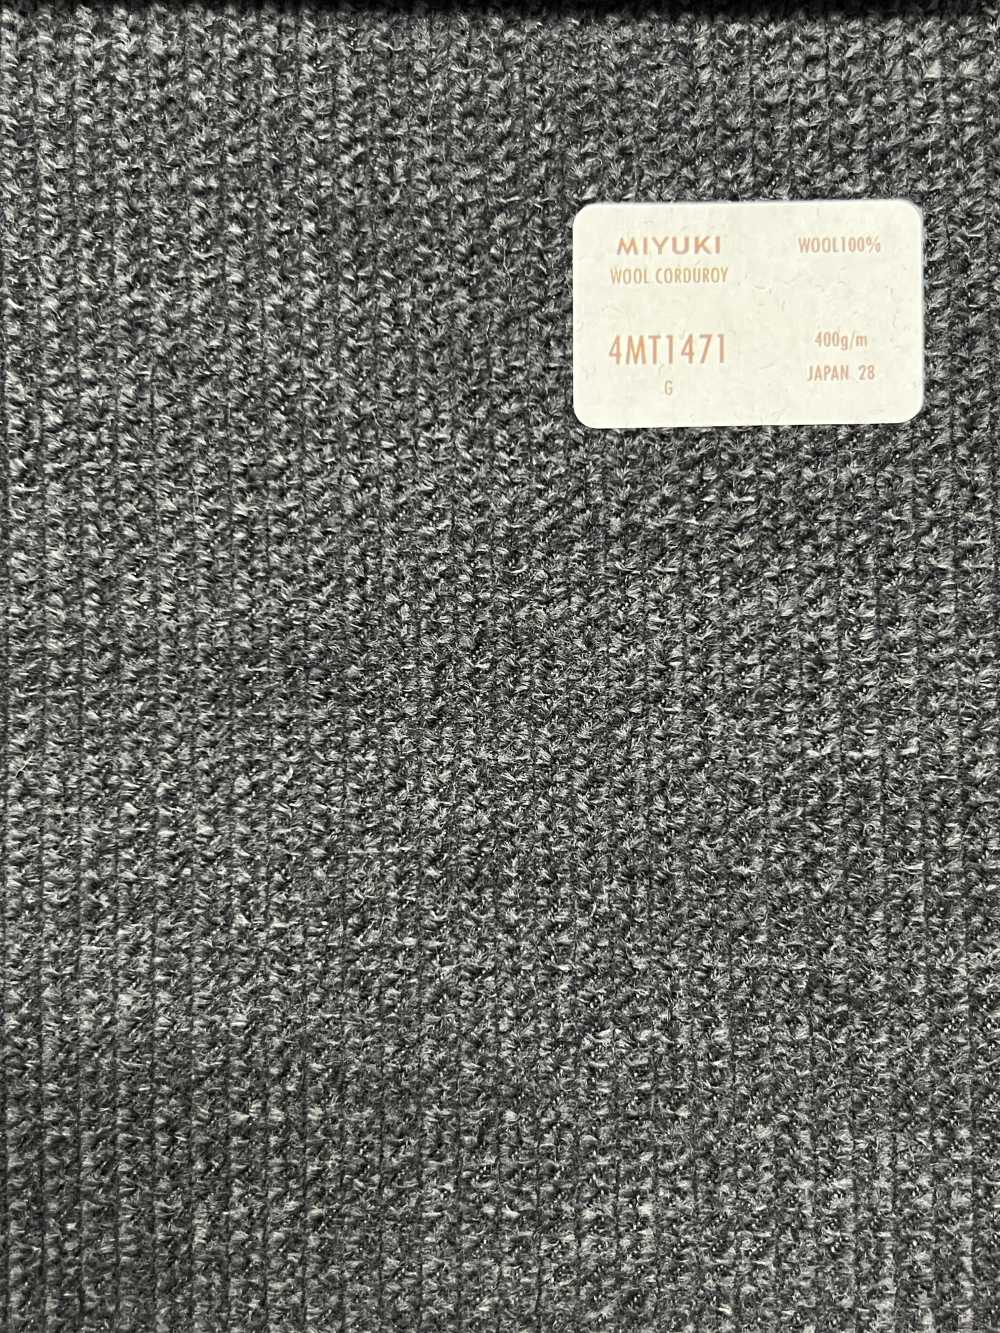 4MT1471 COMFORT LINE AIRFLY 羊毛燈芯絨 炭灰色[面料] 美雪敬織 (Miyuki)